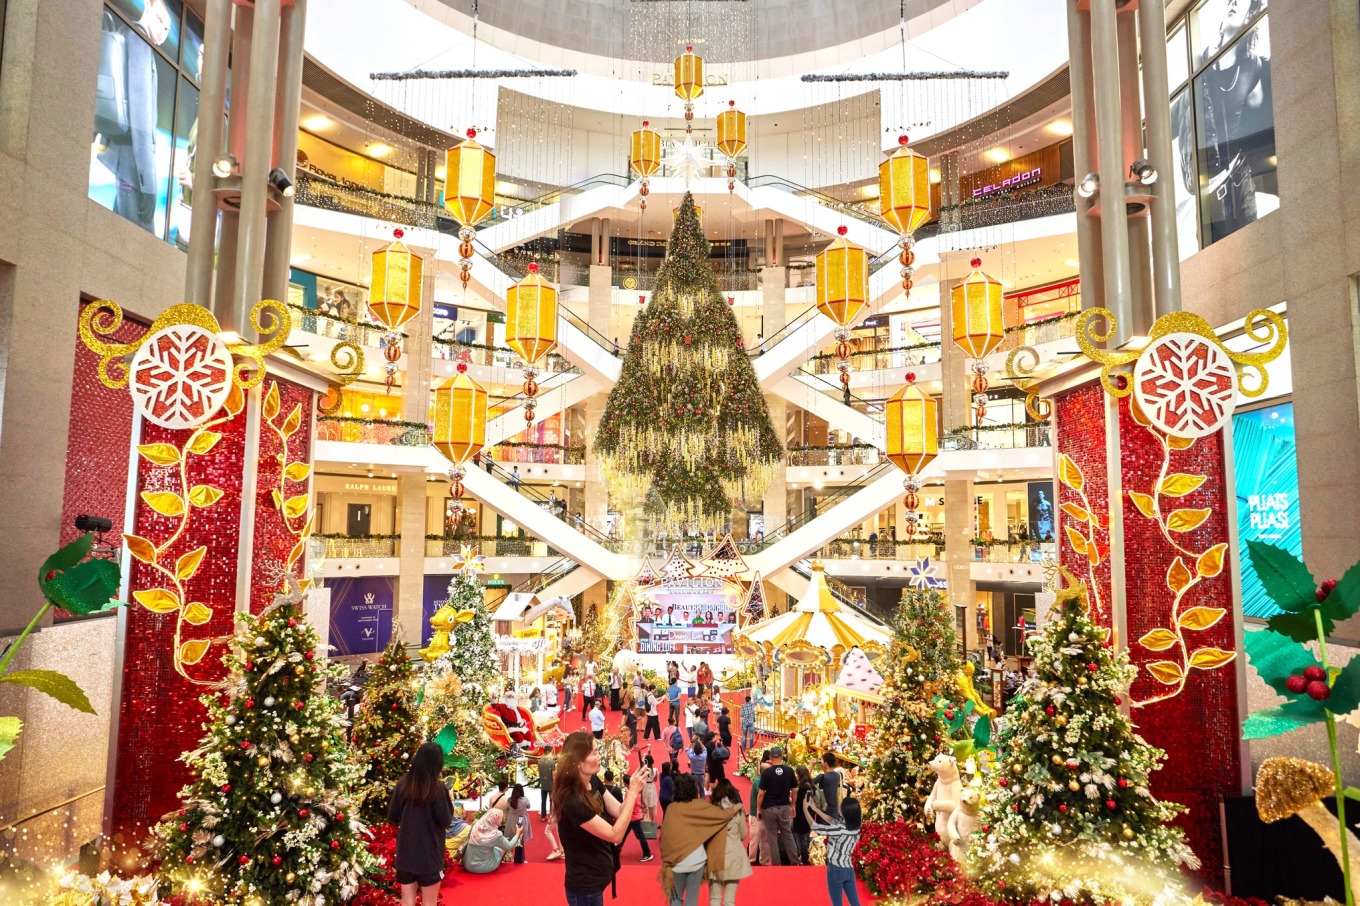 Singaporean tourist injured by falling Christmas tree in Kuala Lumpur mall